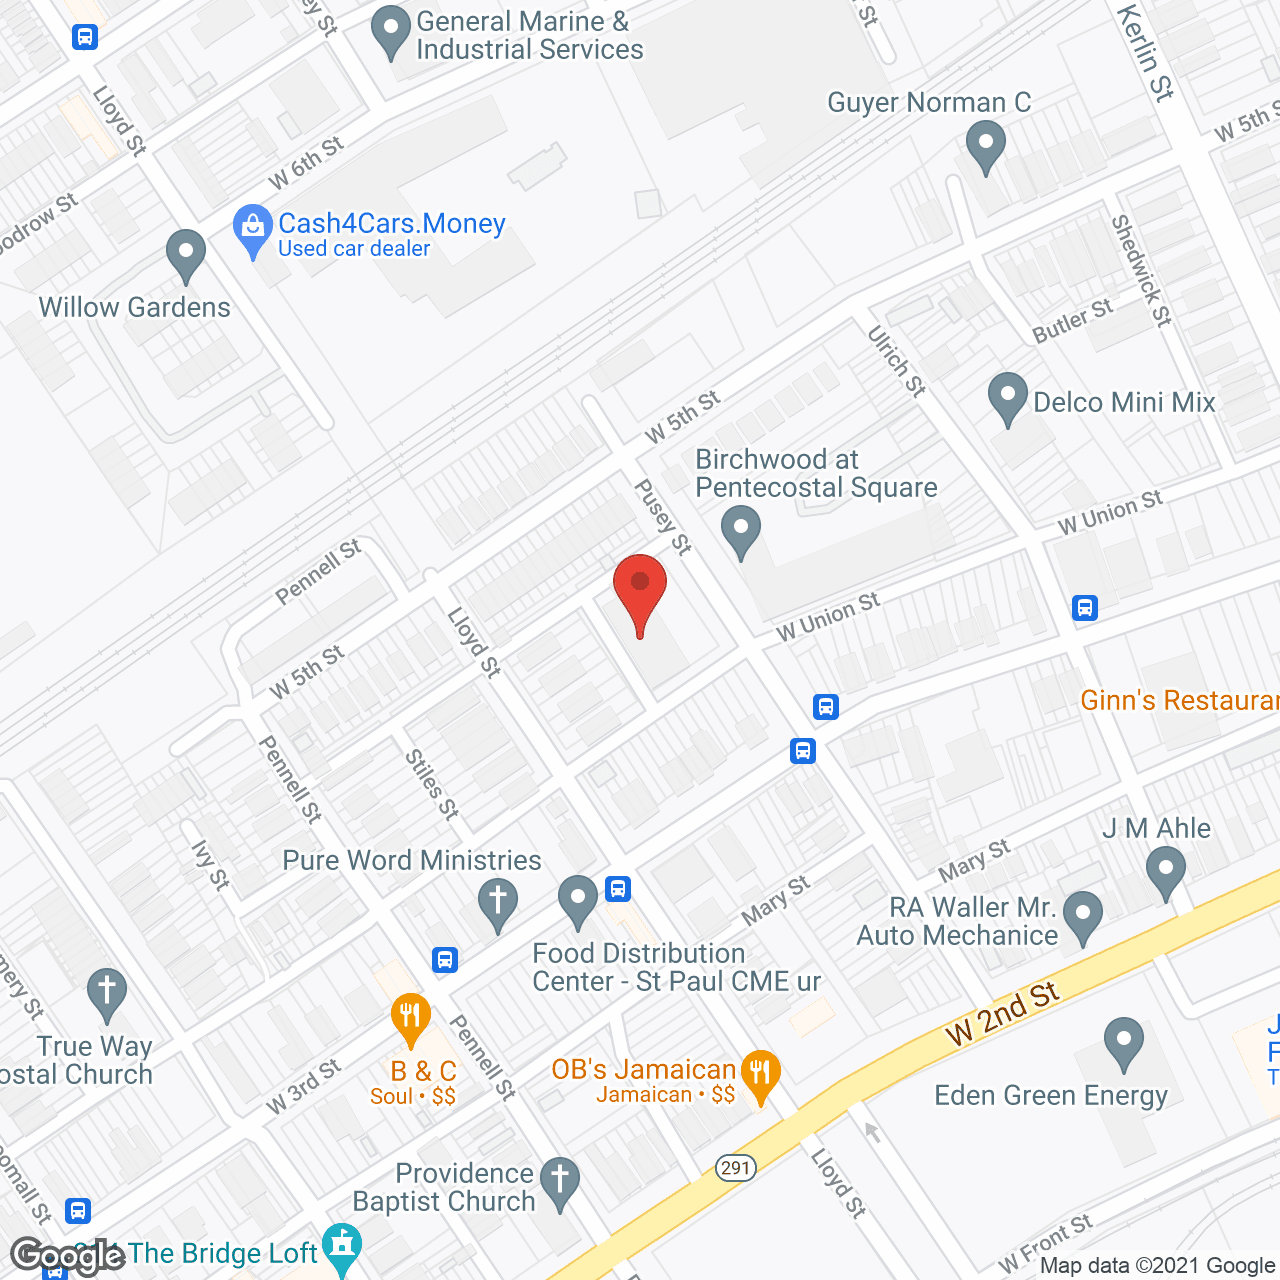 Pentecostal Square in google map